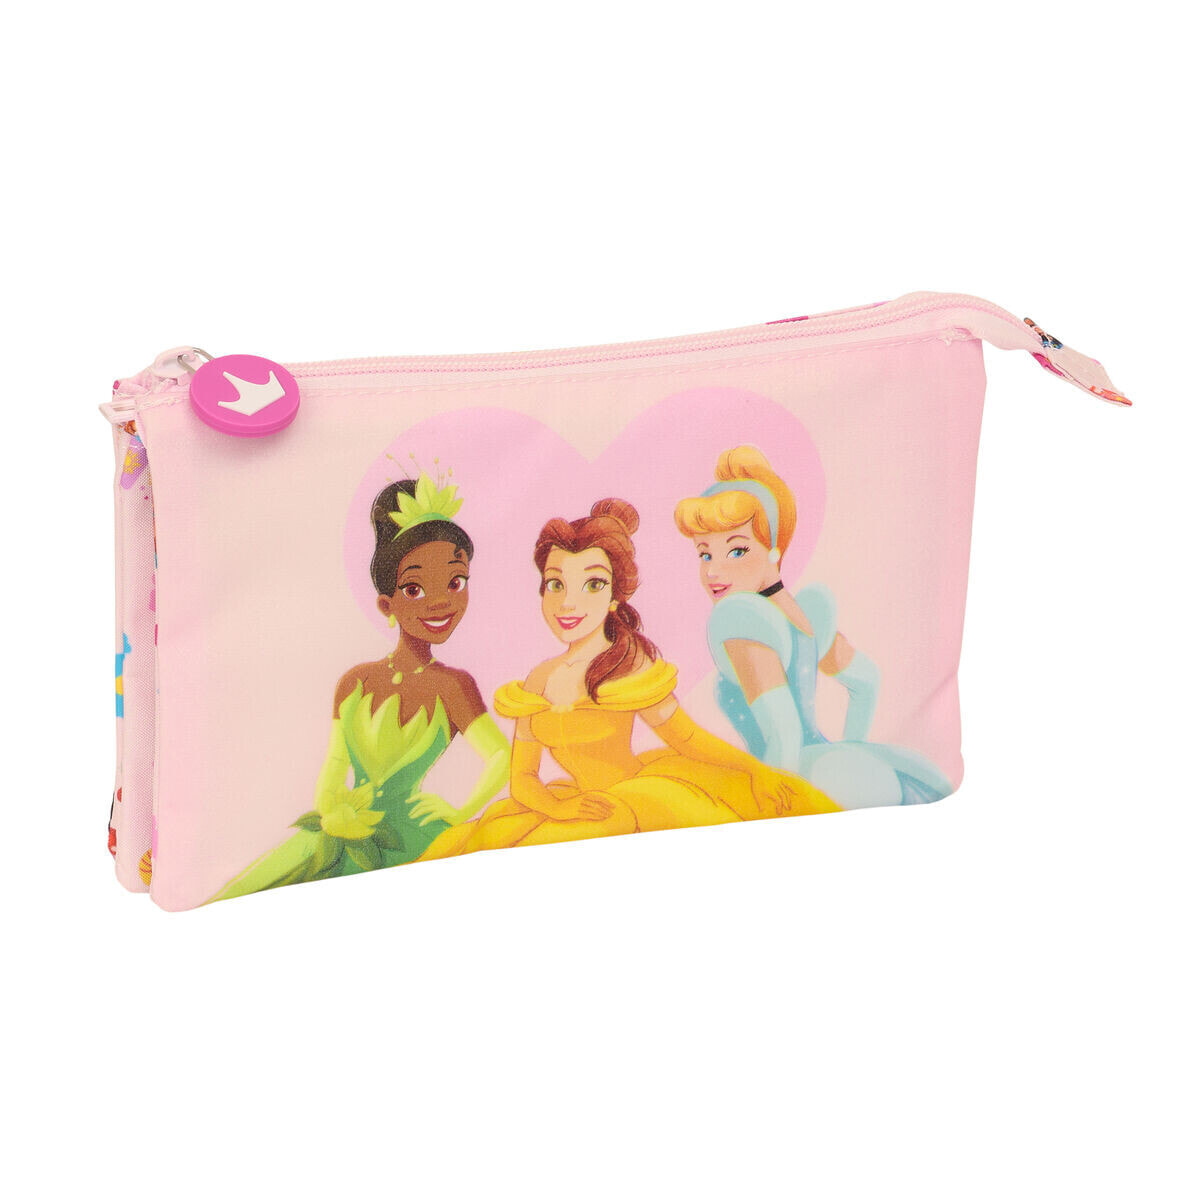 Double Carry-all Princesses Disney Summer adventures Pink 22 x 12 x 3 cm